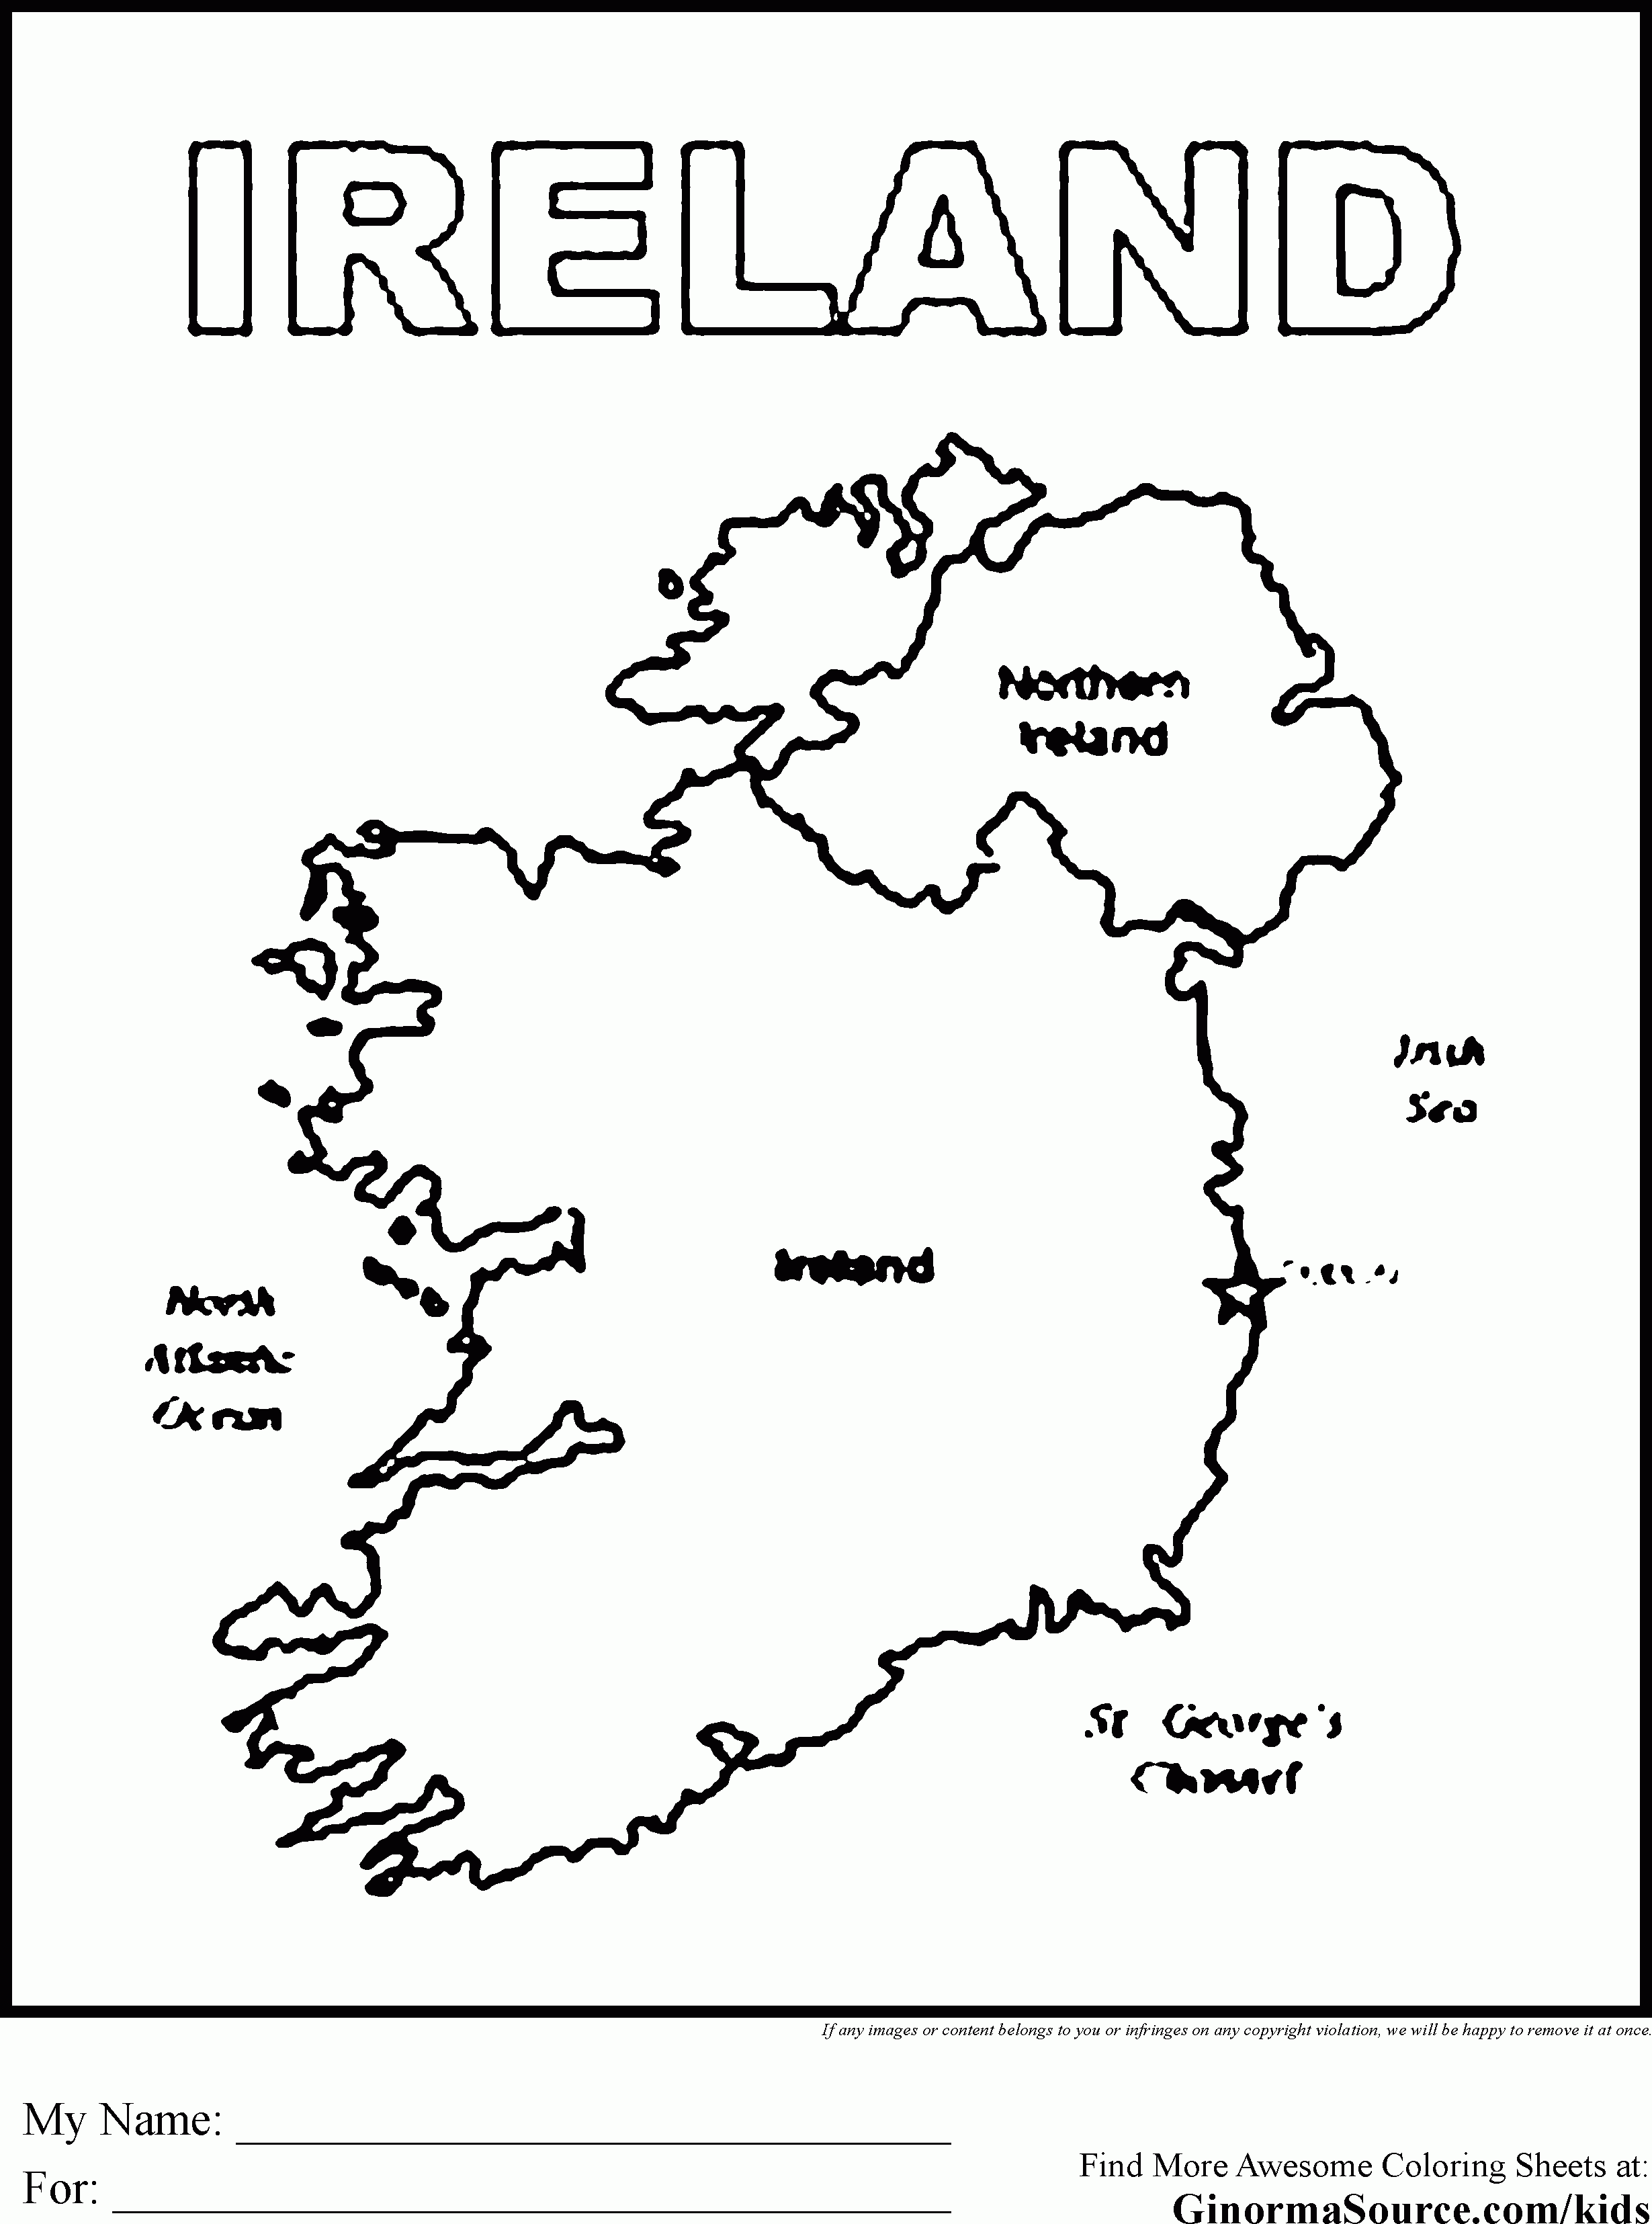 Ireland coloring #14, Download drawings